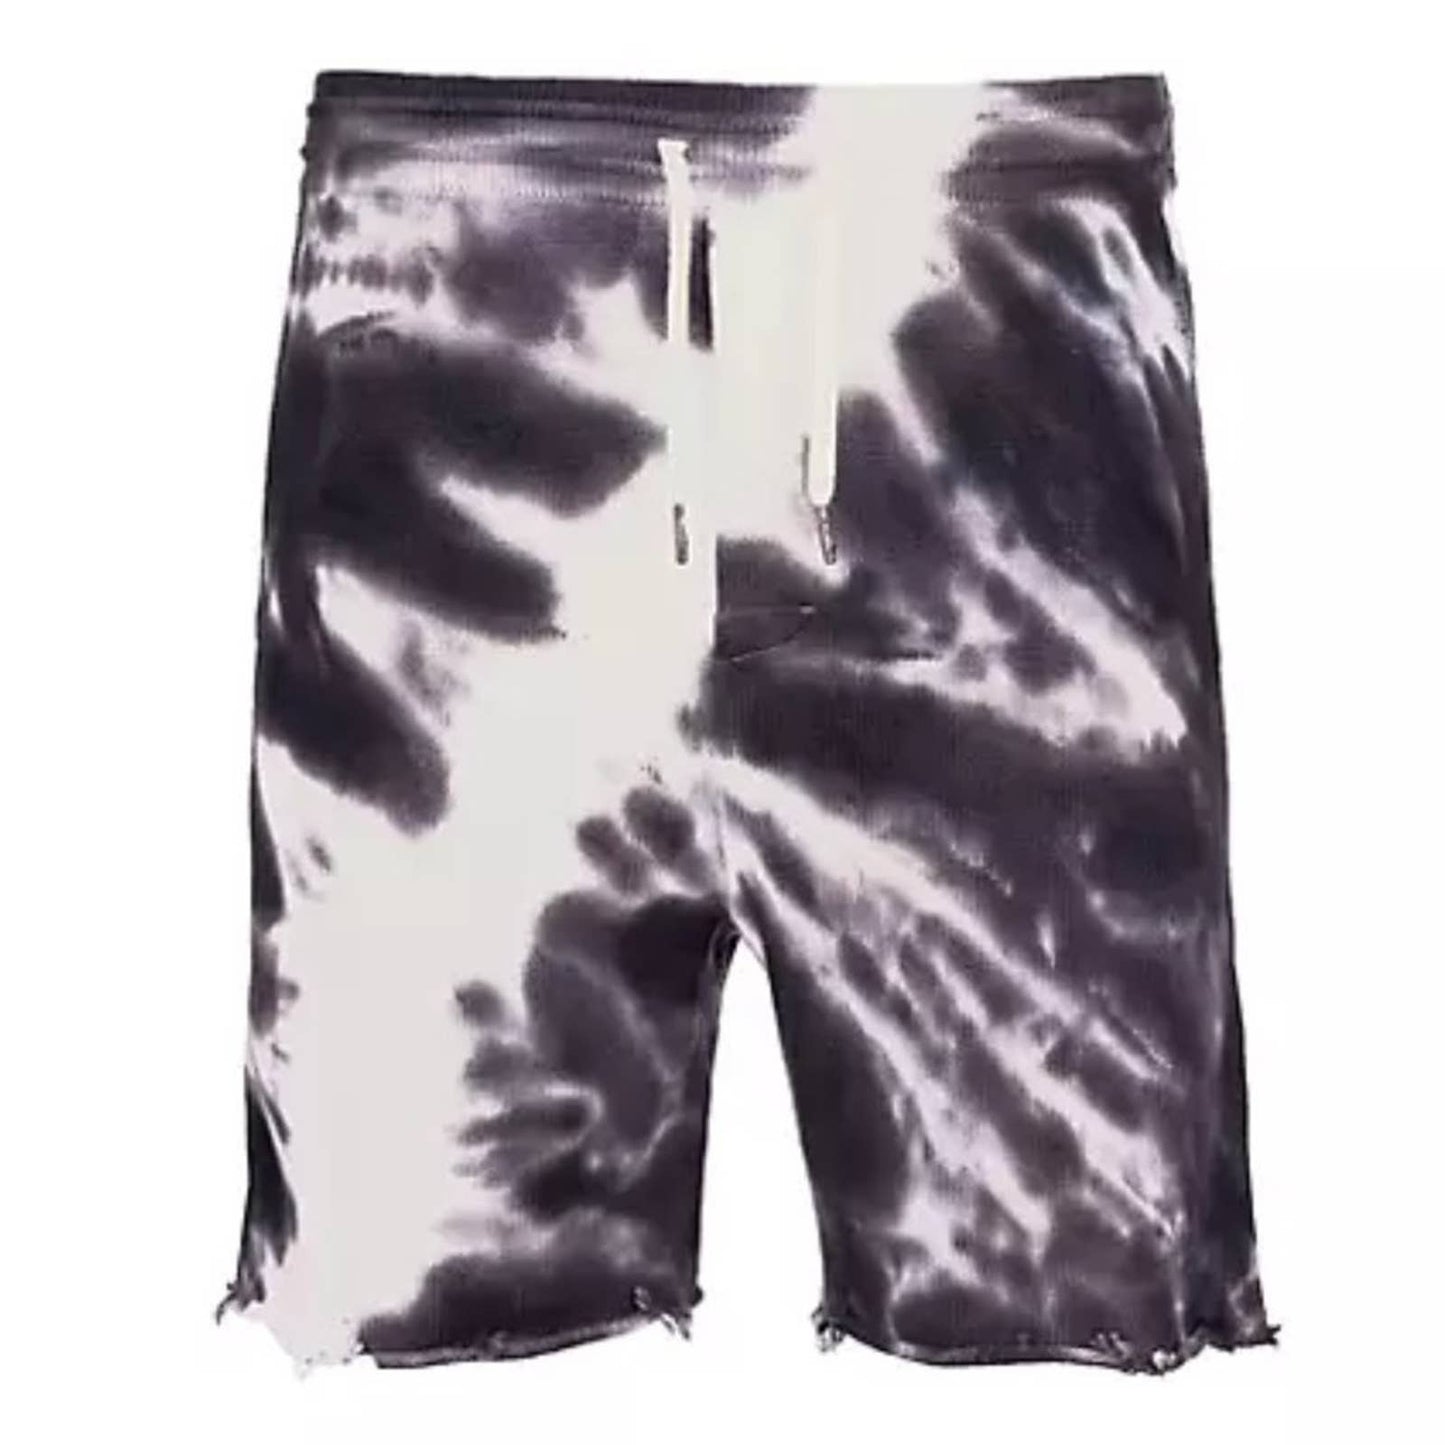 Ser.o.ya Randell Shorts in Black & White Tie Dye NWT Size M